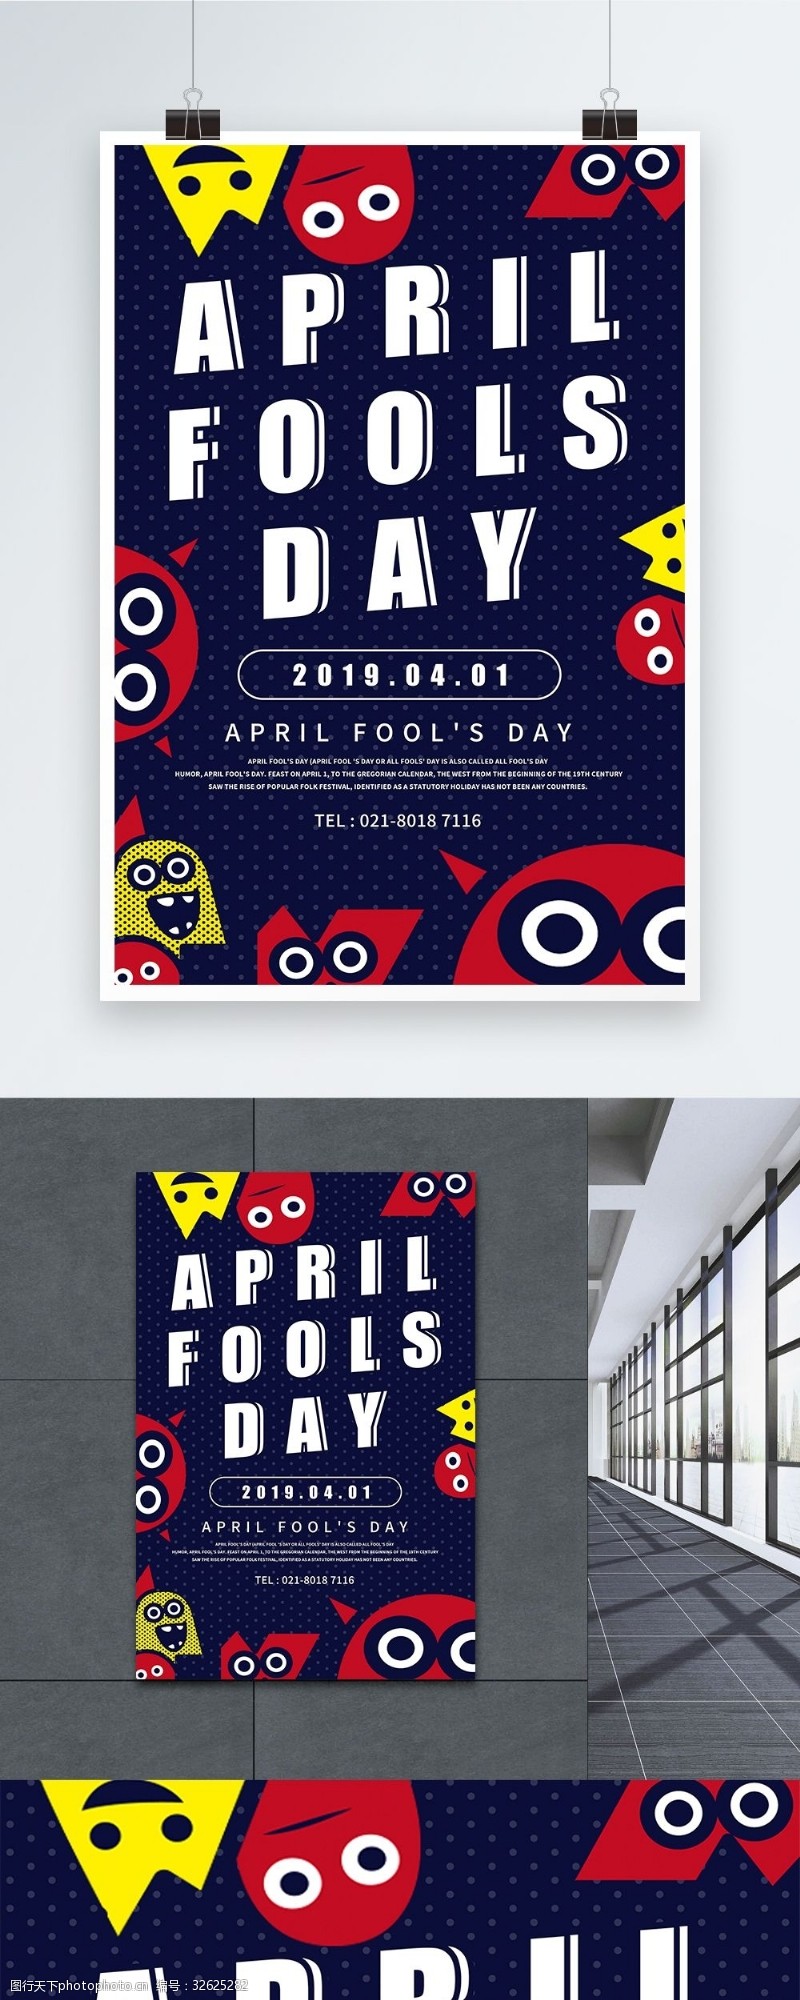 april愚人节宣传英文海报